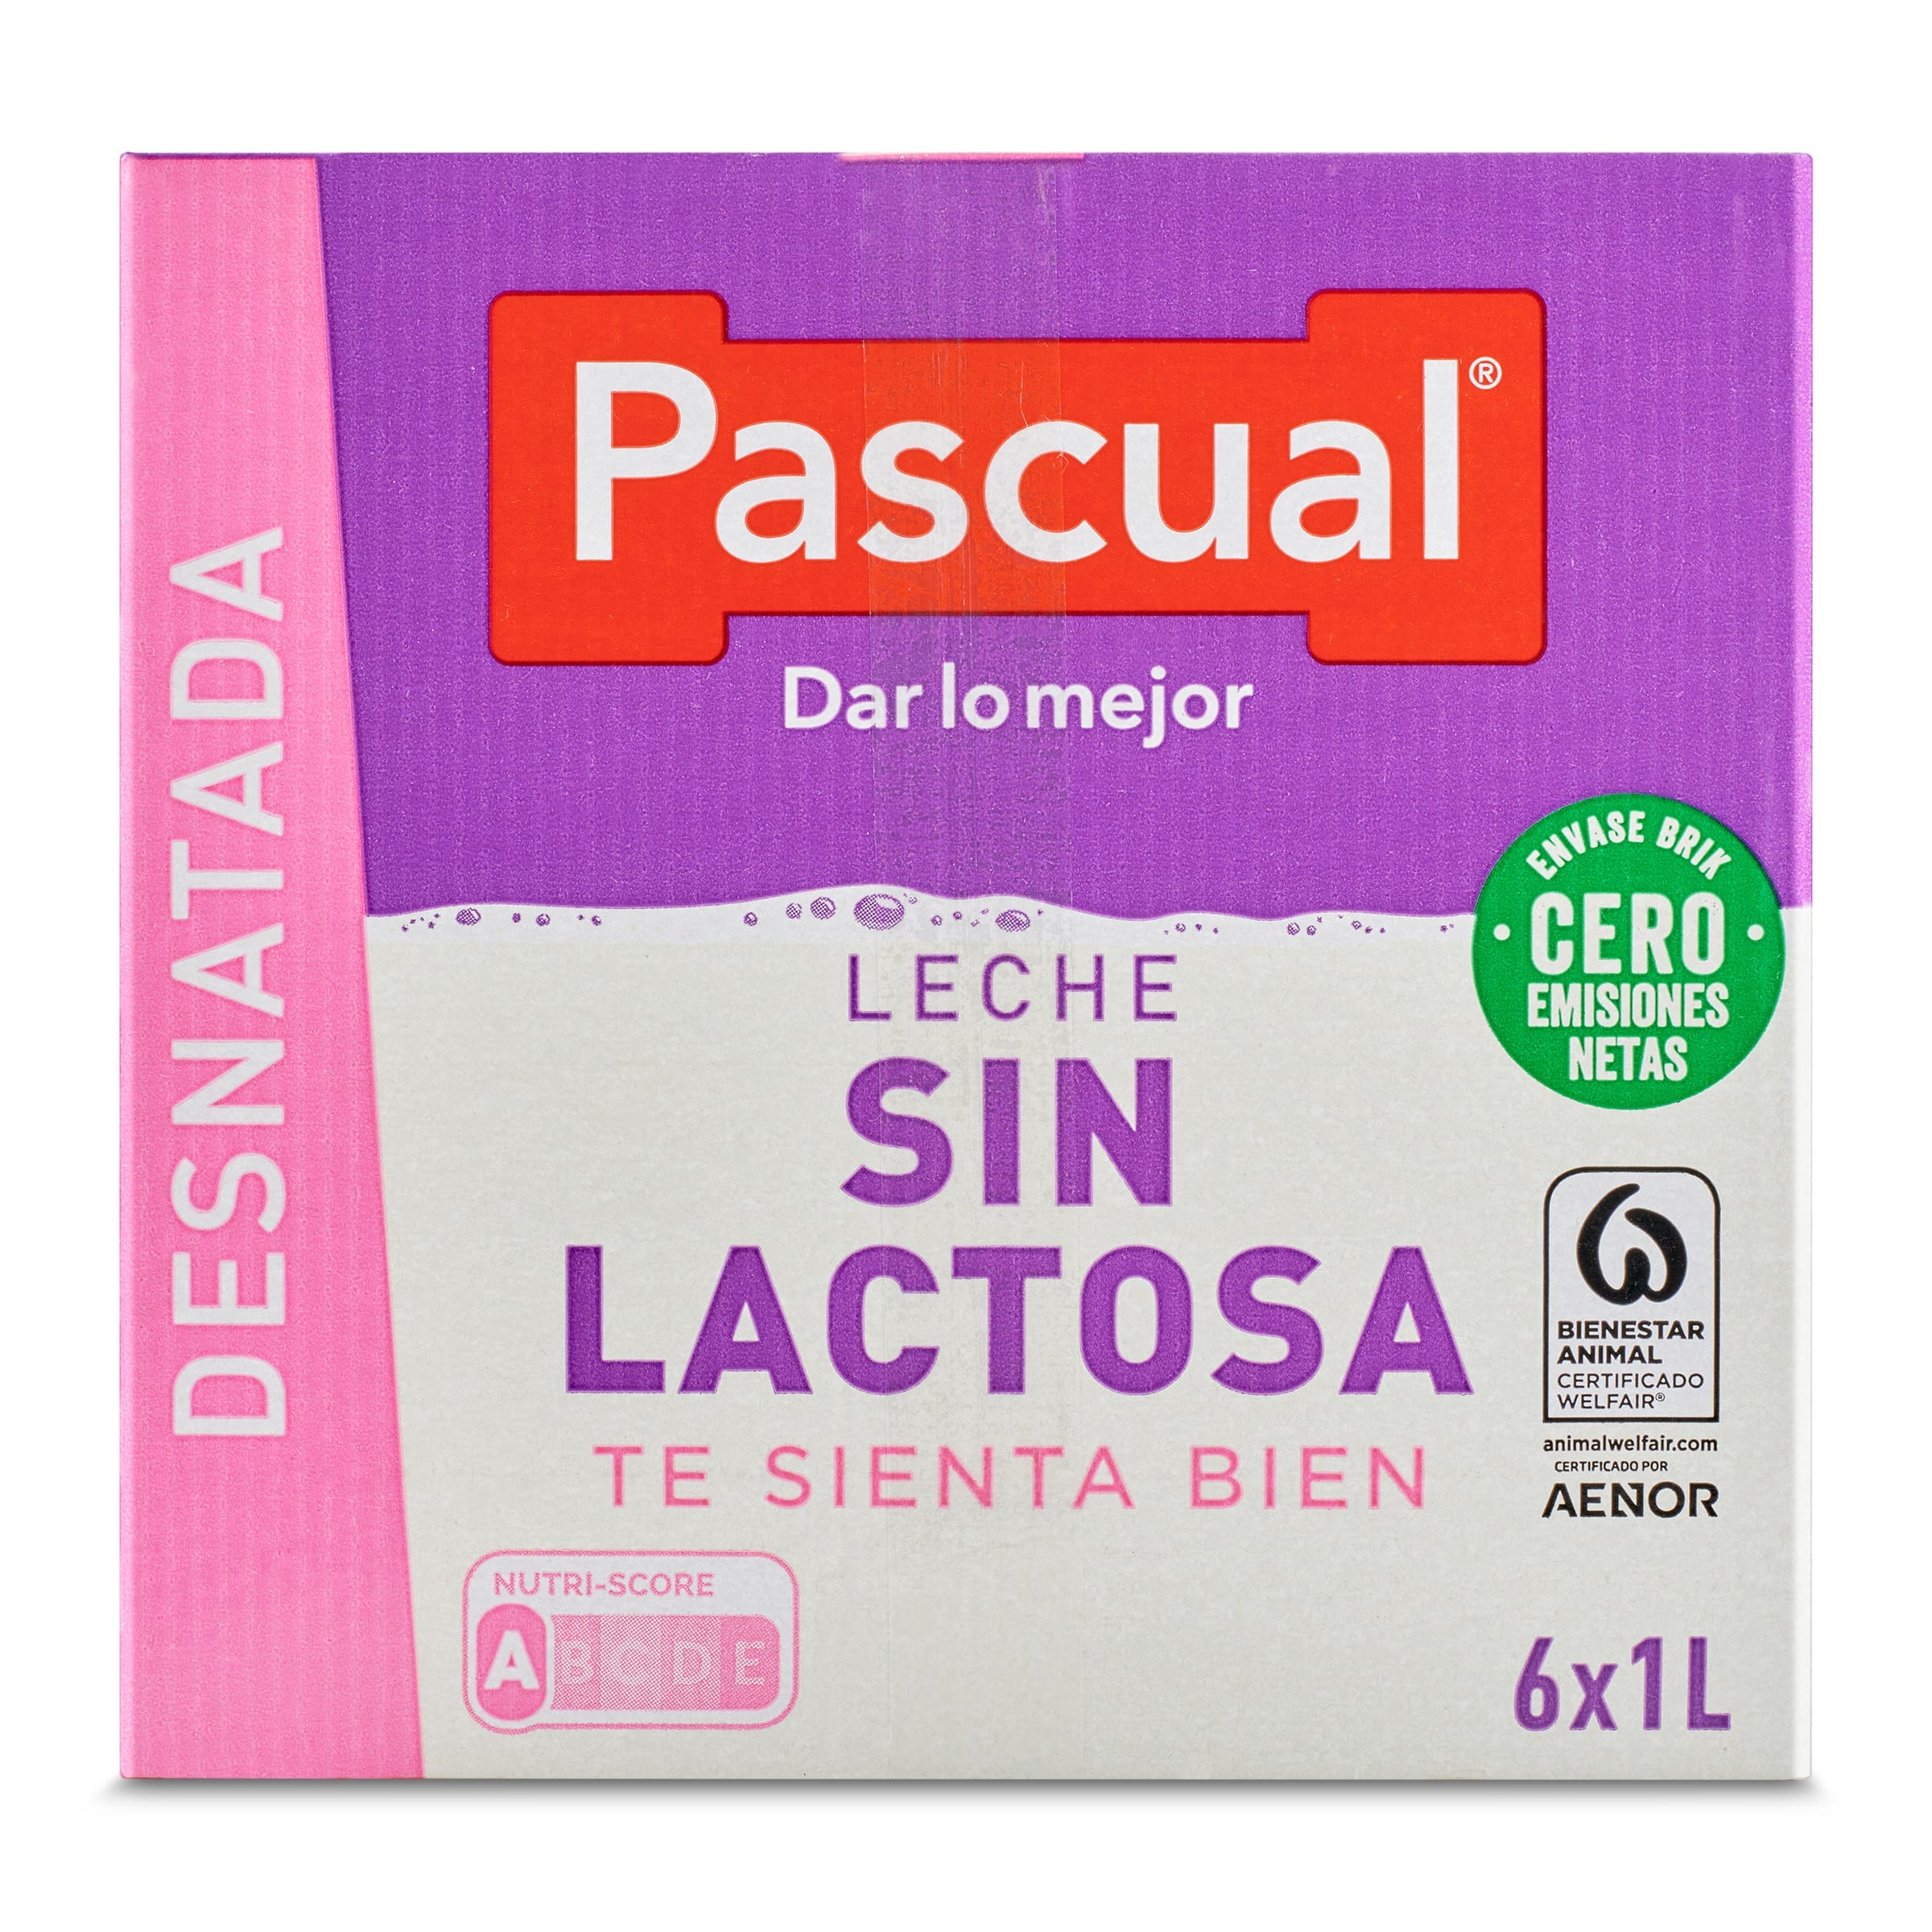 Leche Pascual Sin Lactosa, ahora en formato 'mini' - Calidad Pascual